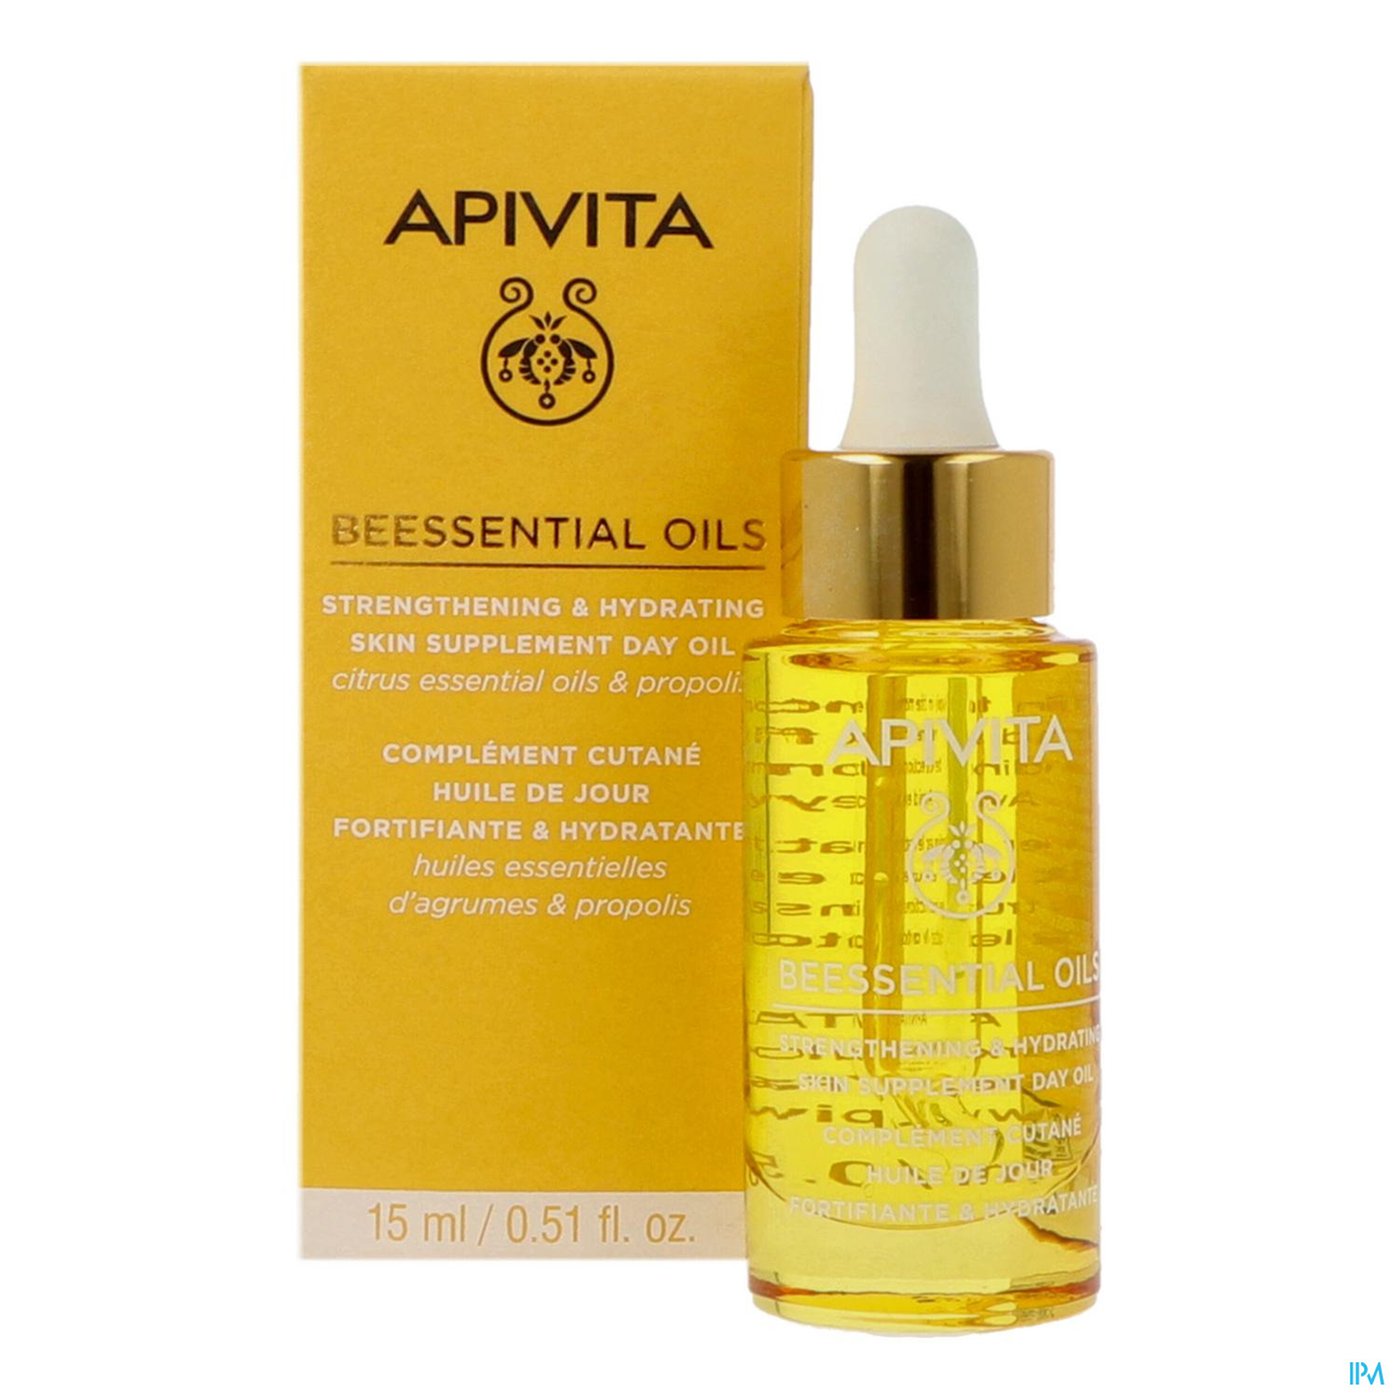 Apivita Beessential Strengt.&hydra Day Oil Cr 15ml productshot